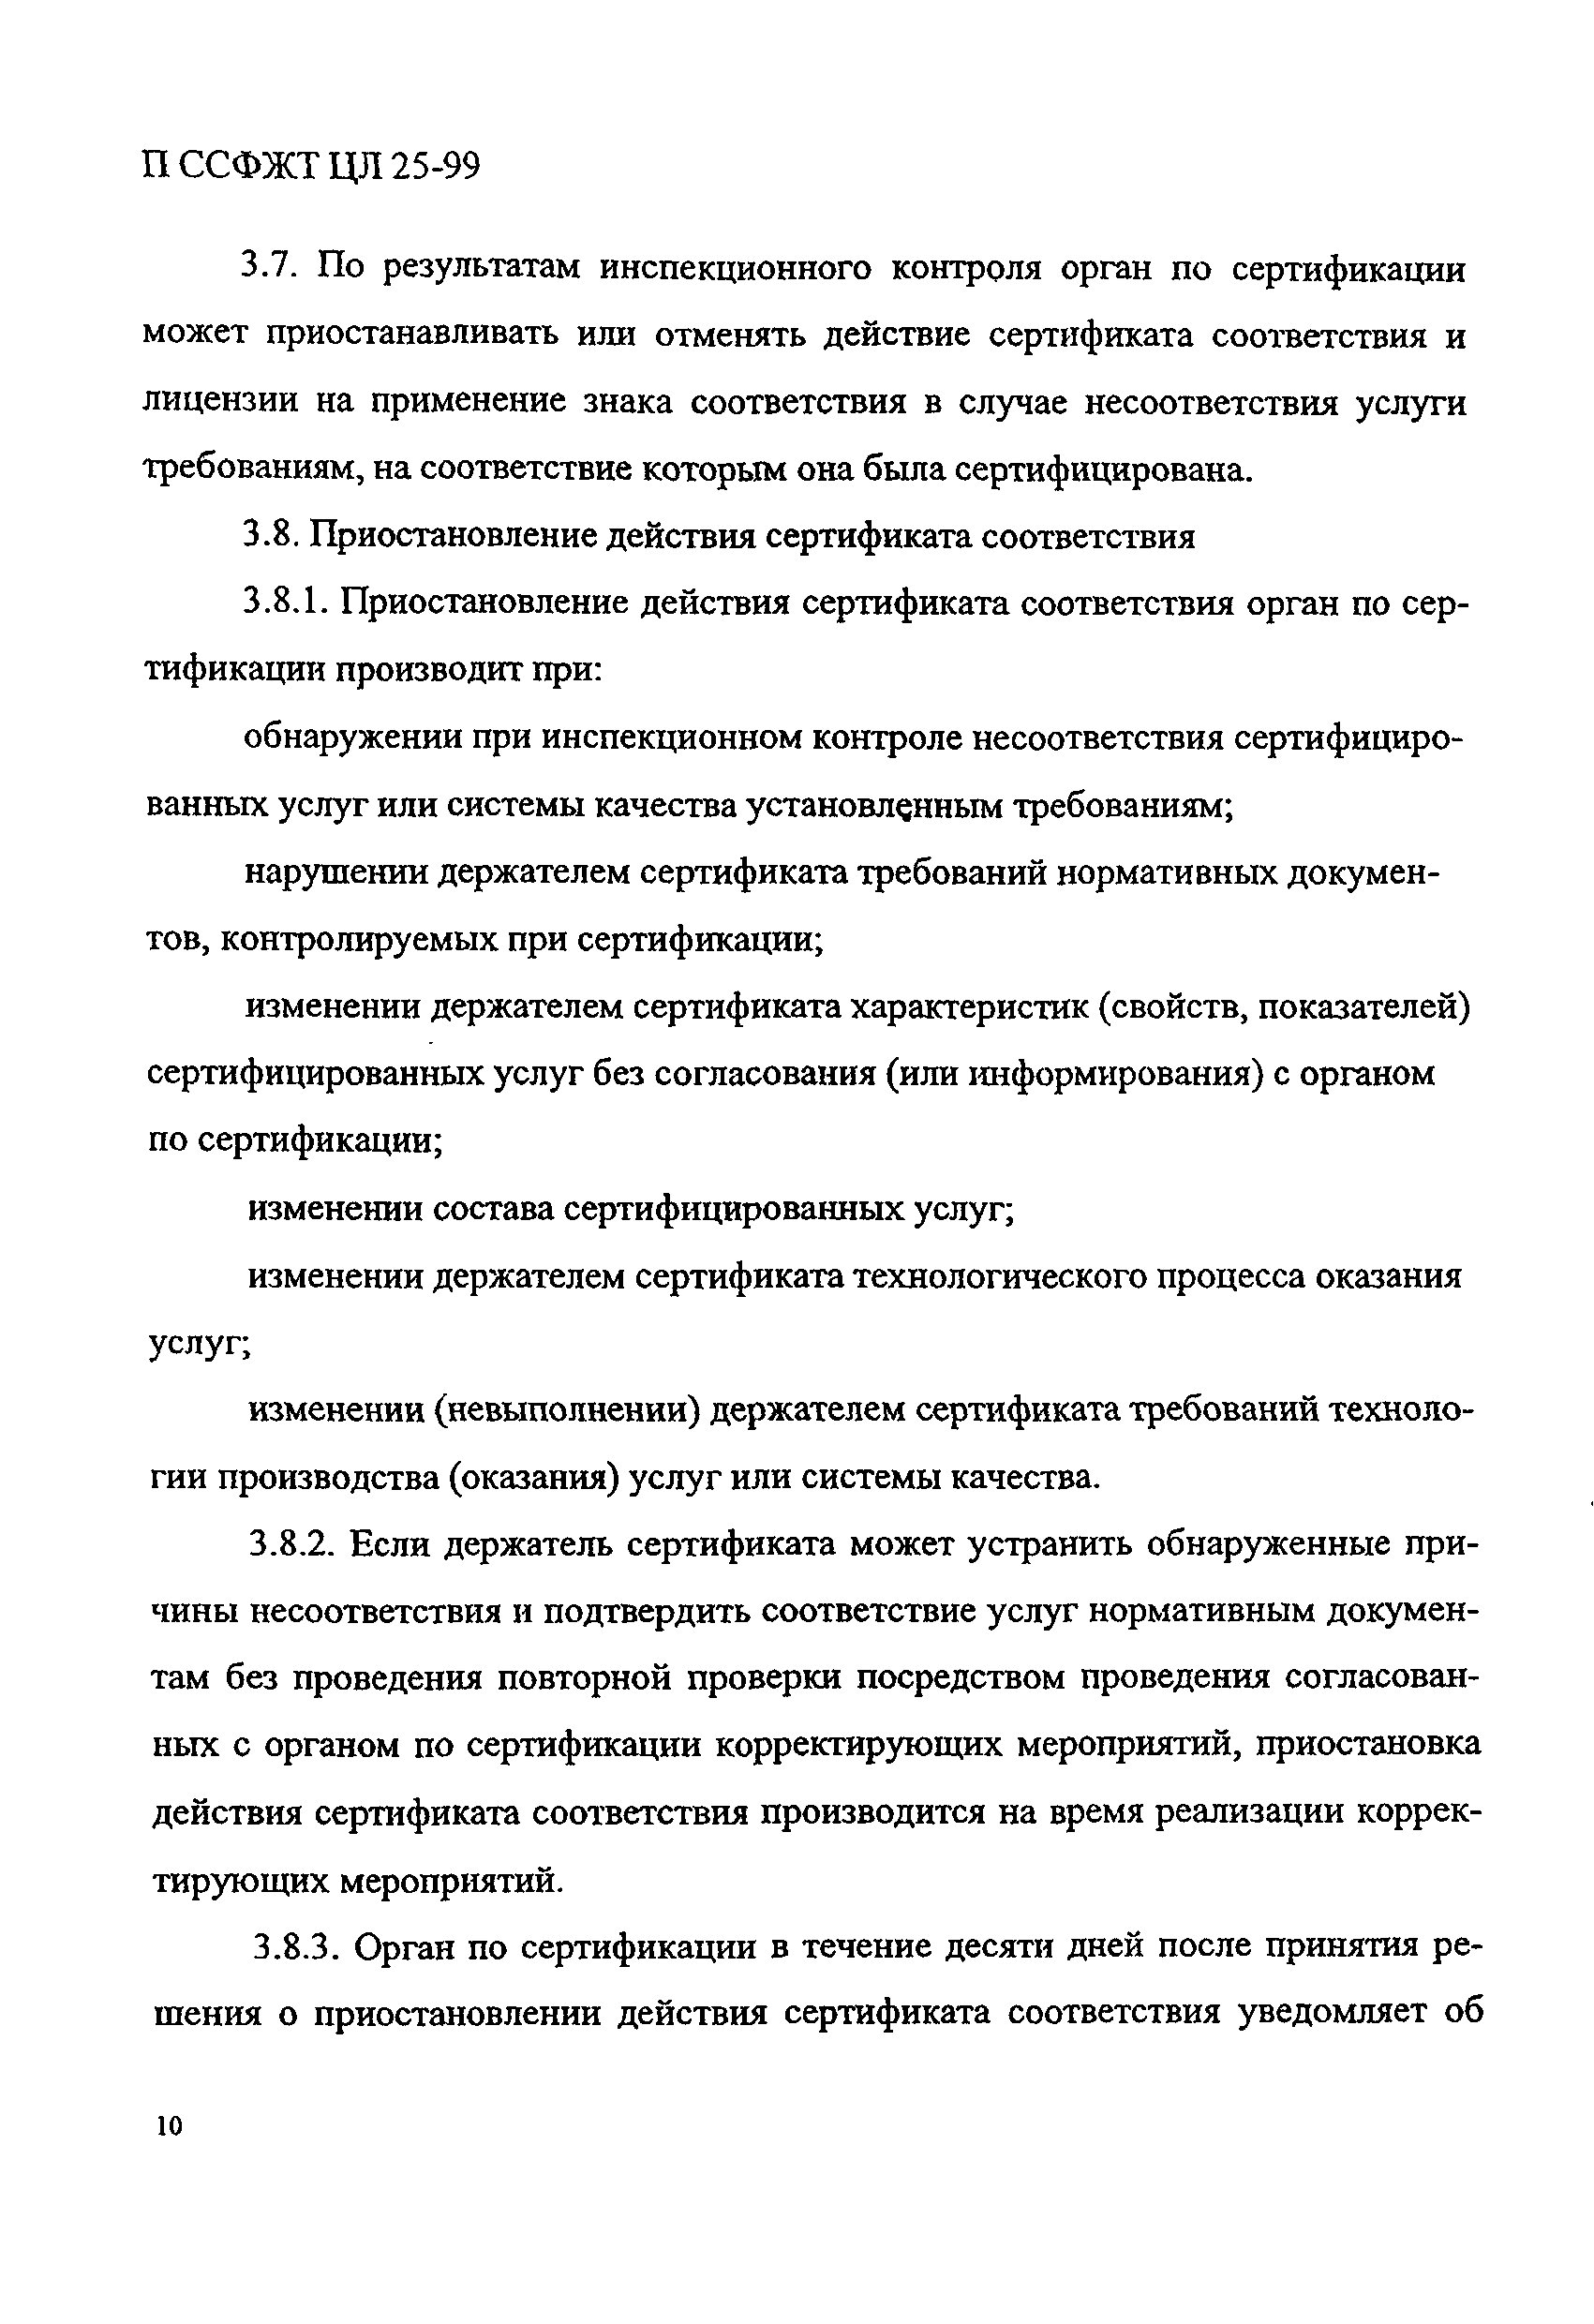 П ССФЖТ ЦЛ 25-99